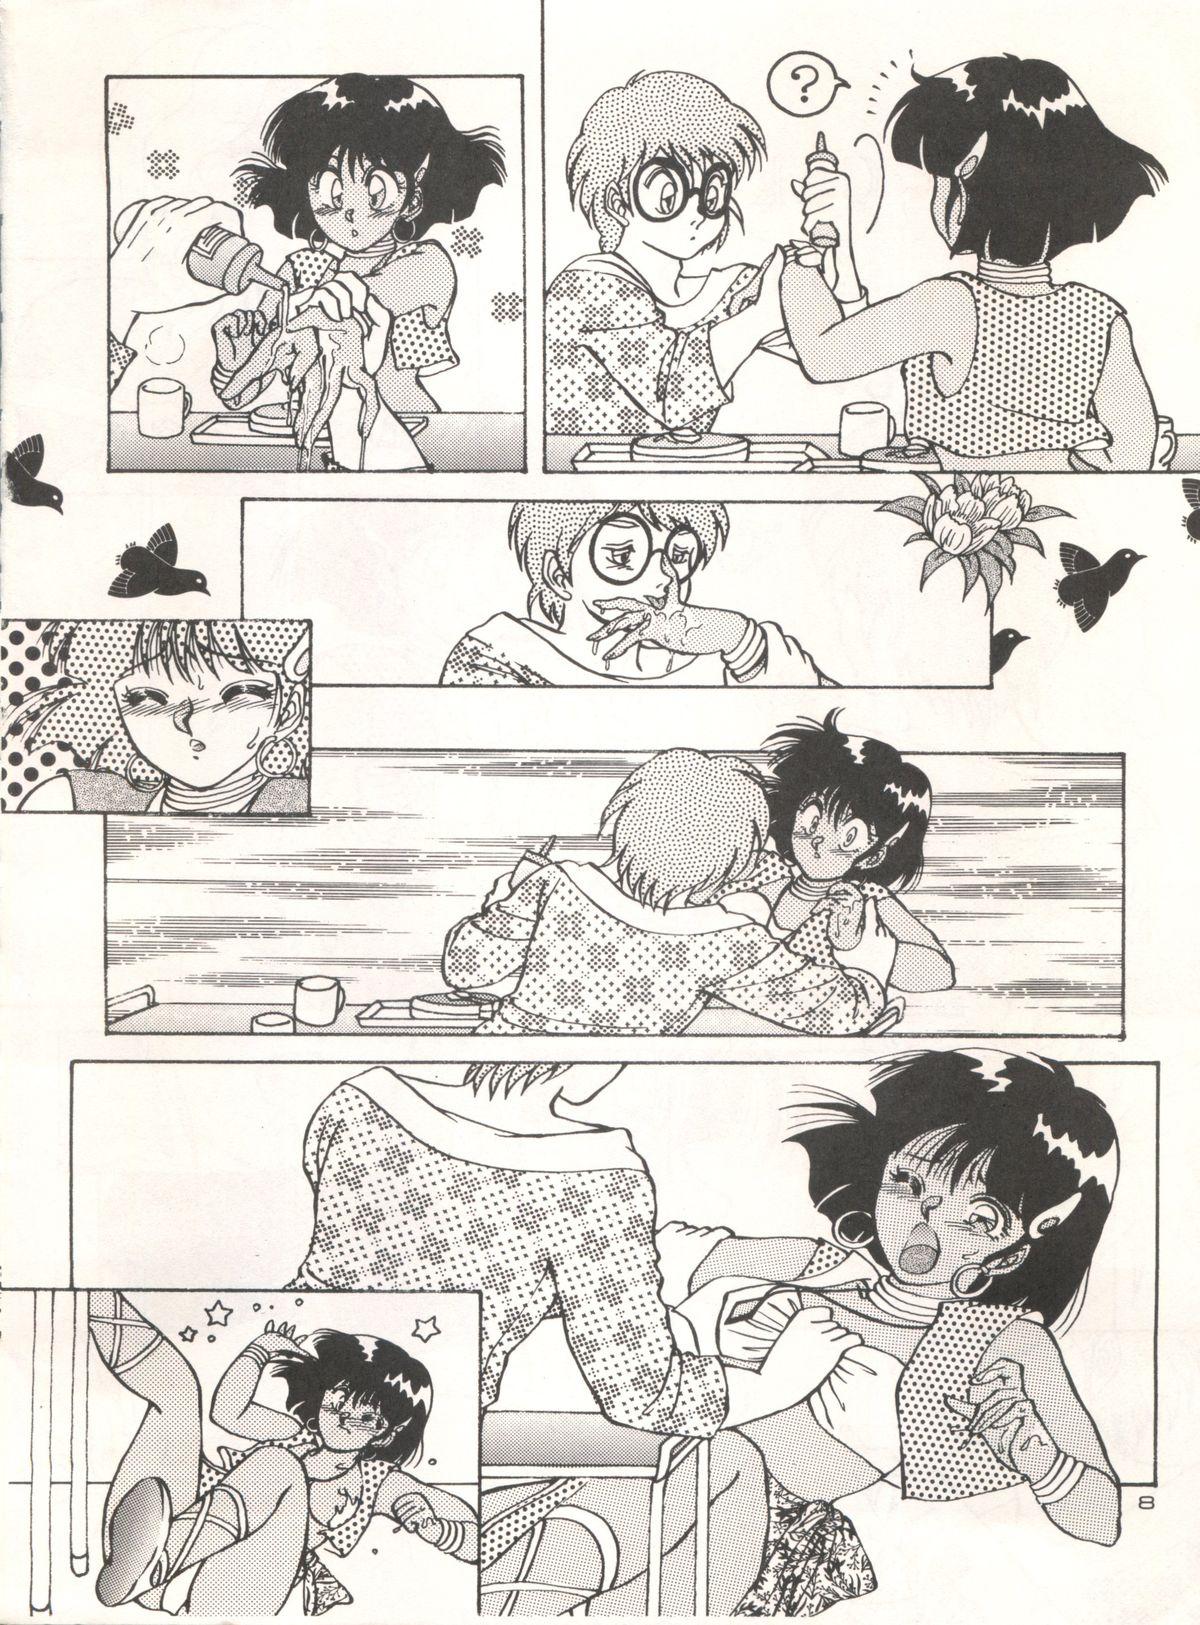 Free Fucking Nadia Girls in Emerald Sea vol. 2 - Minies Club 23 - Fushigi no umi no nadia Romance - Page 8